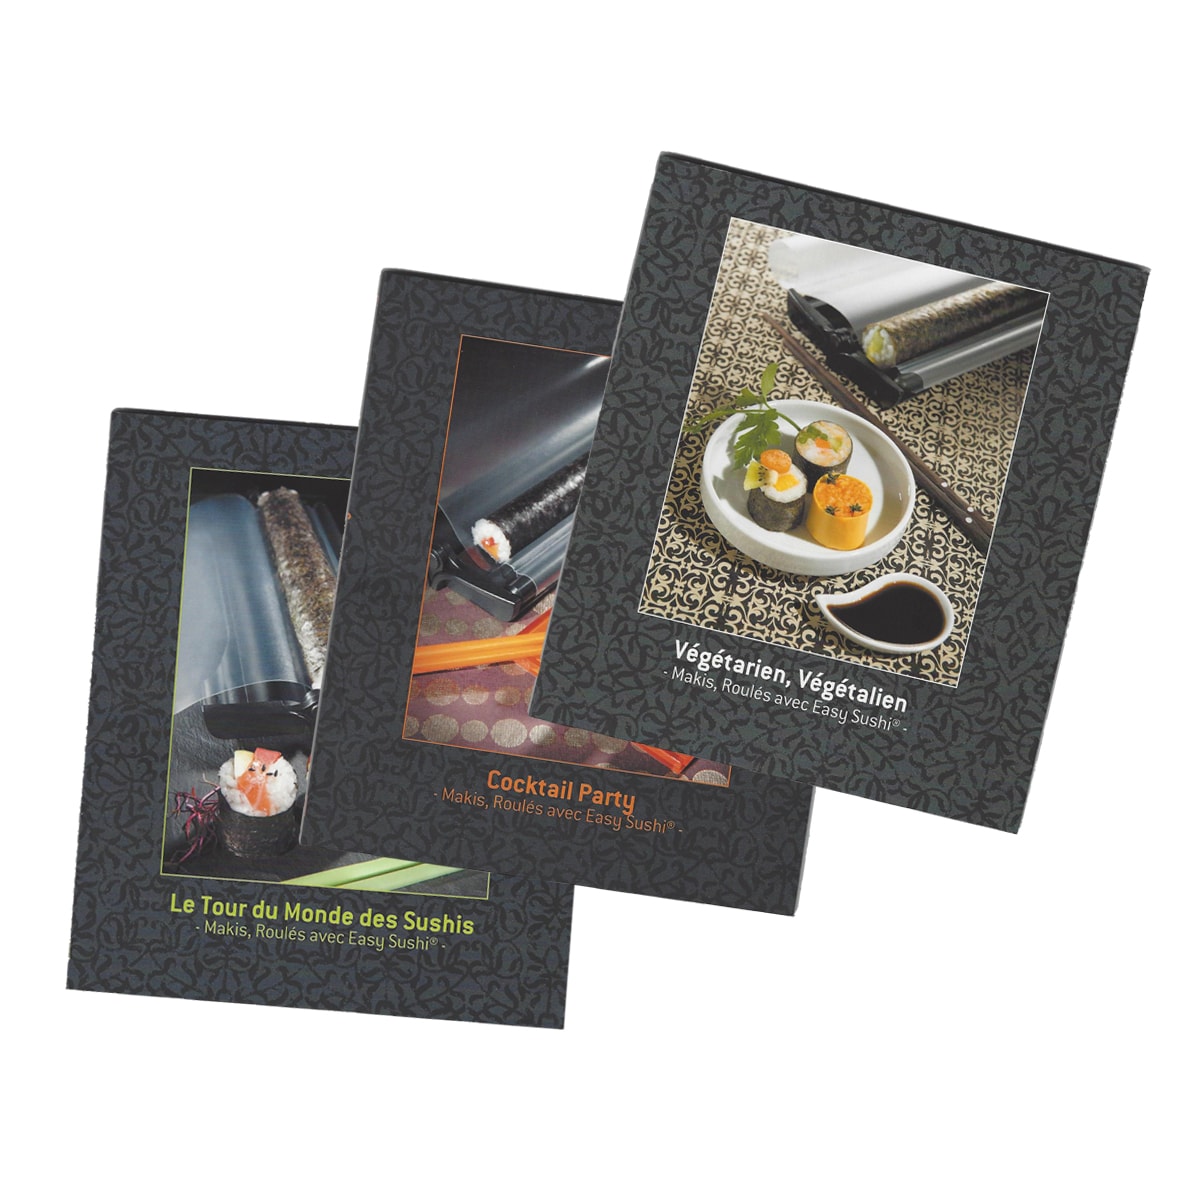 Easy-Sushi-pack-3-Livres